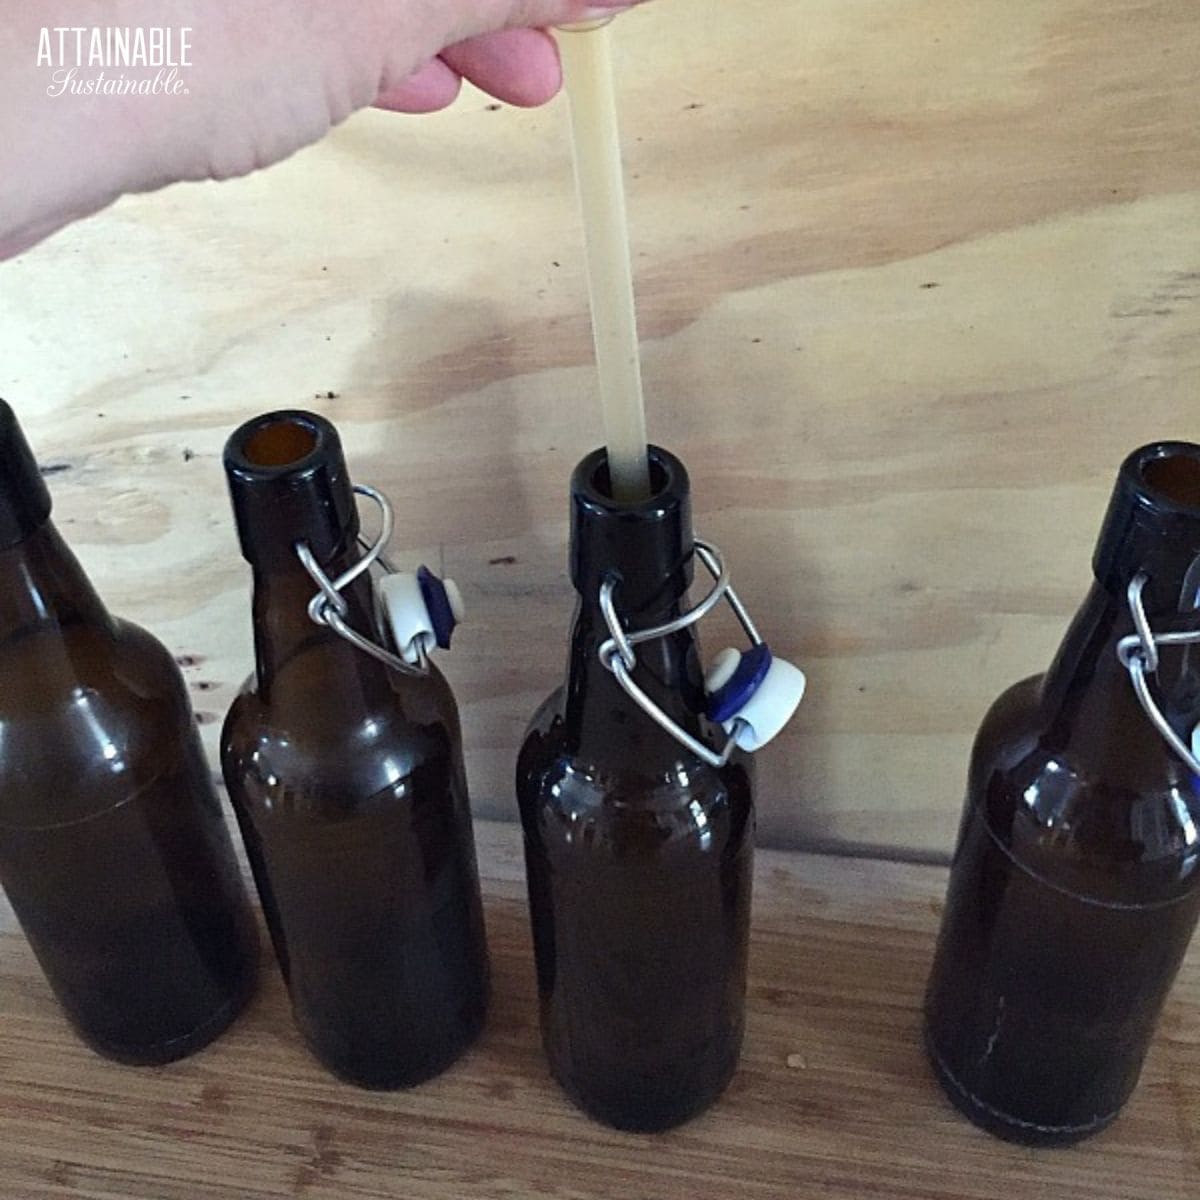 four dark colored swing top bottles prepped for bottling mead.